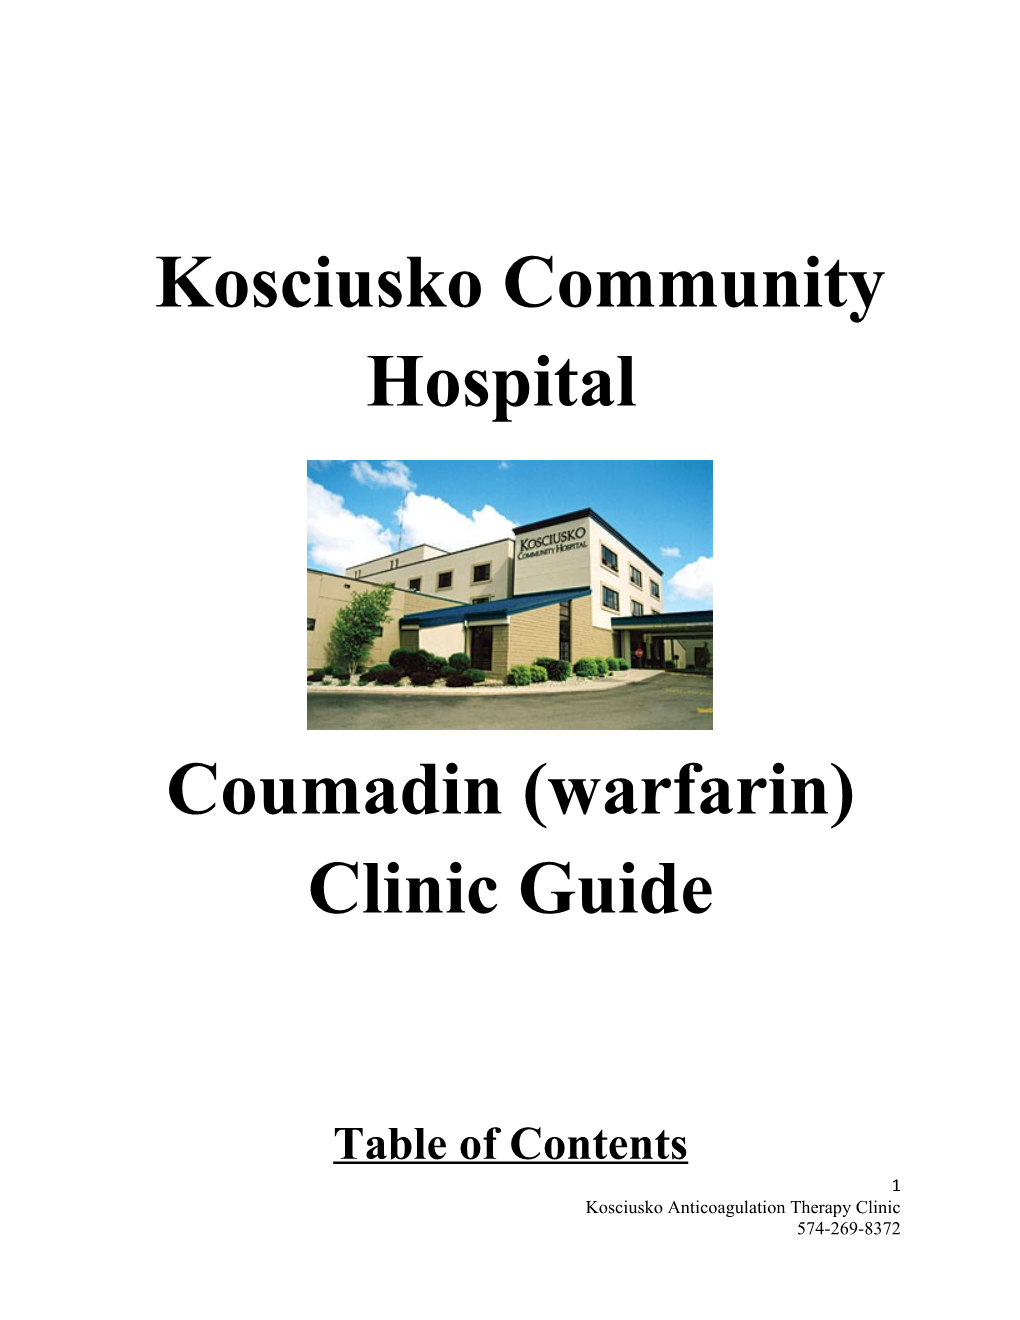 Kosciusko Community Hospital